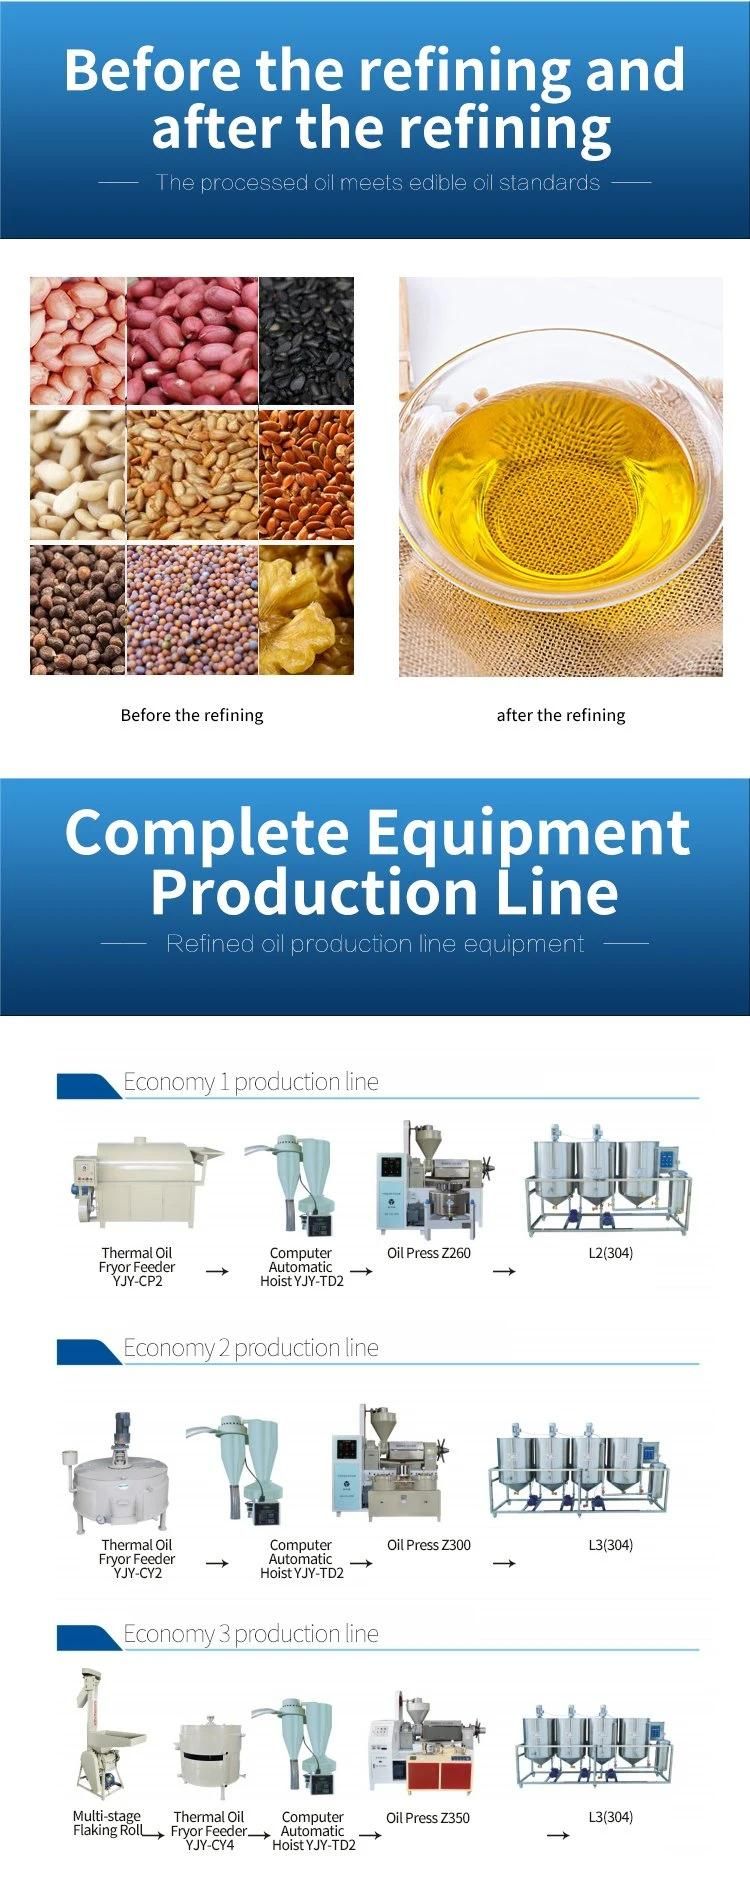 Manufacturing Oil Refining Process Edible Oil Industries, Physical Refining of Edible Oil Refining Machine Sale